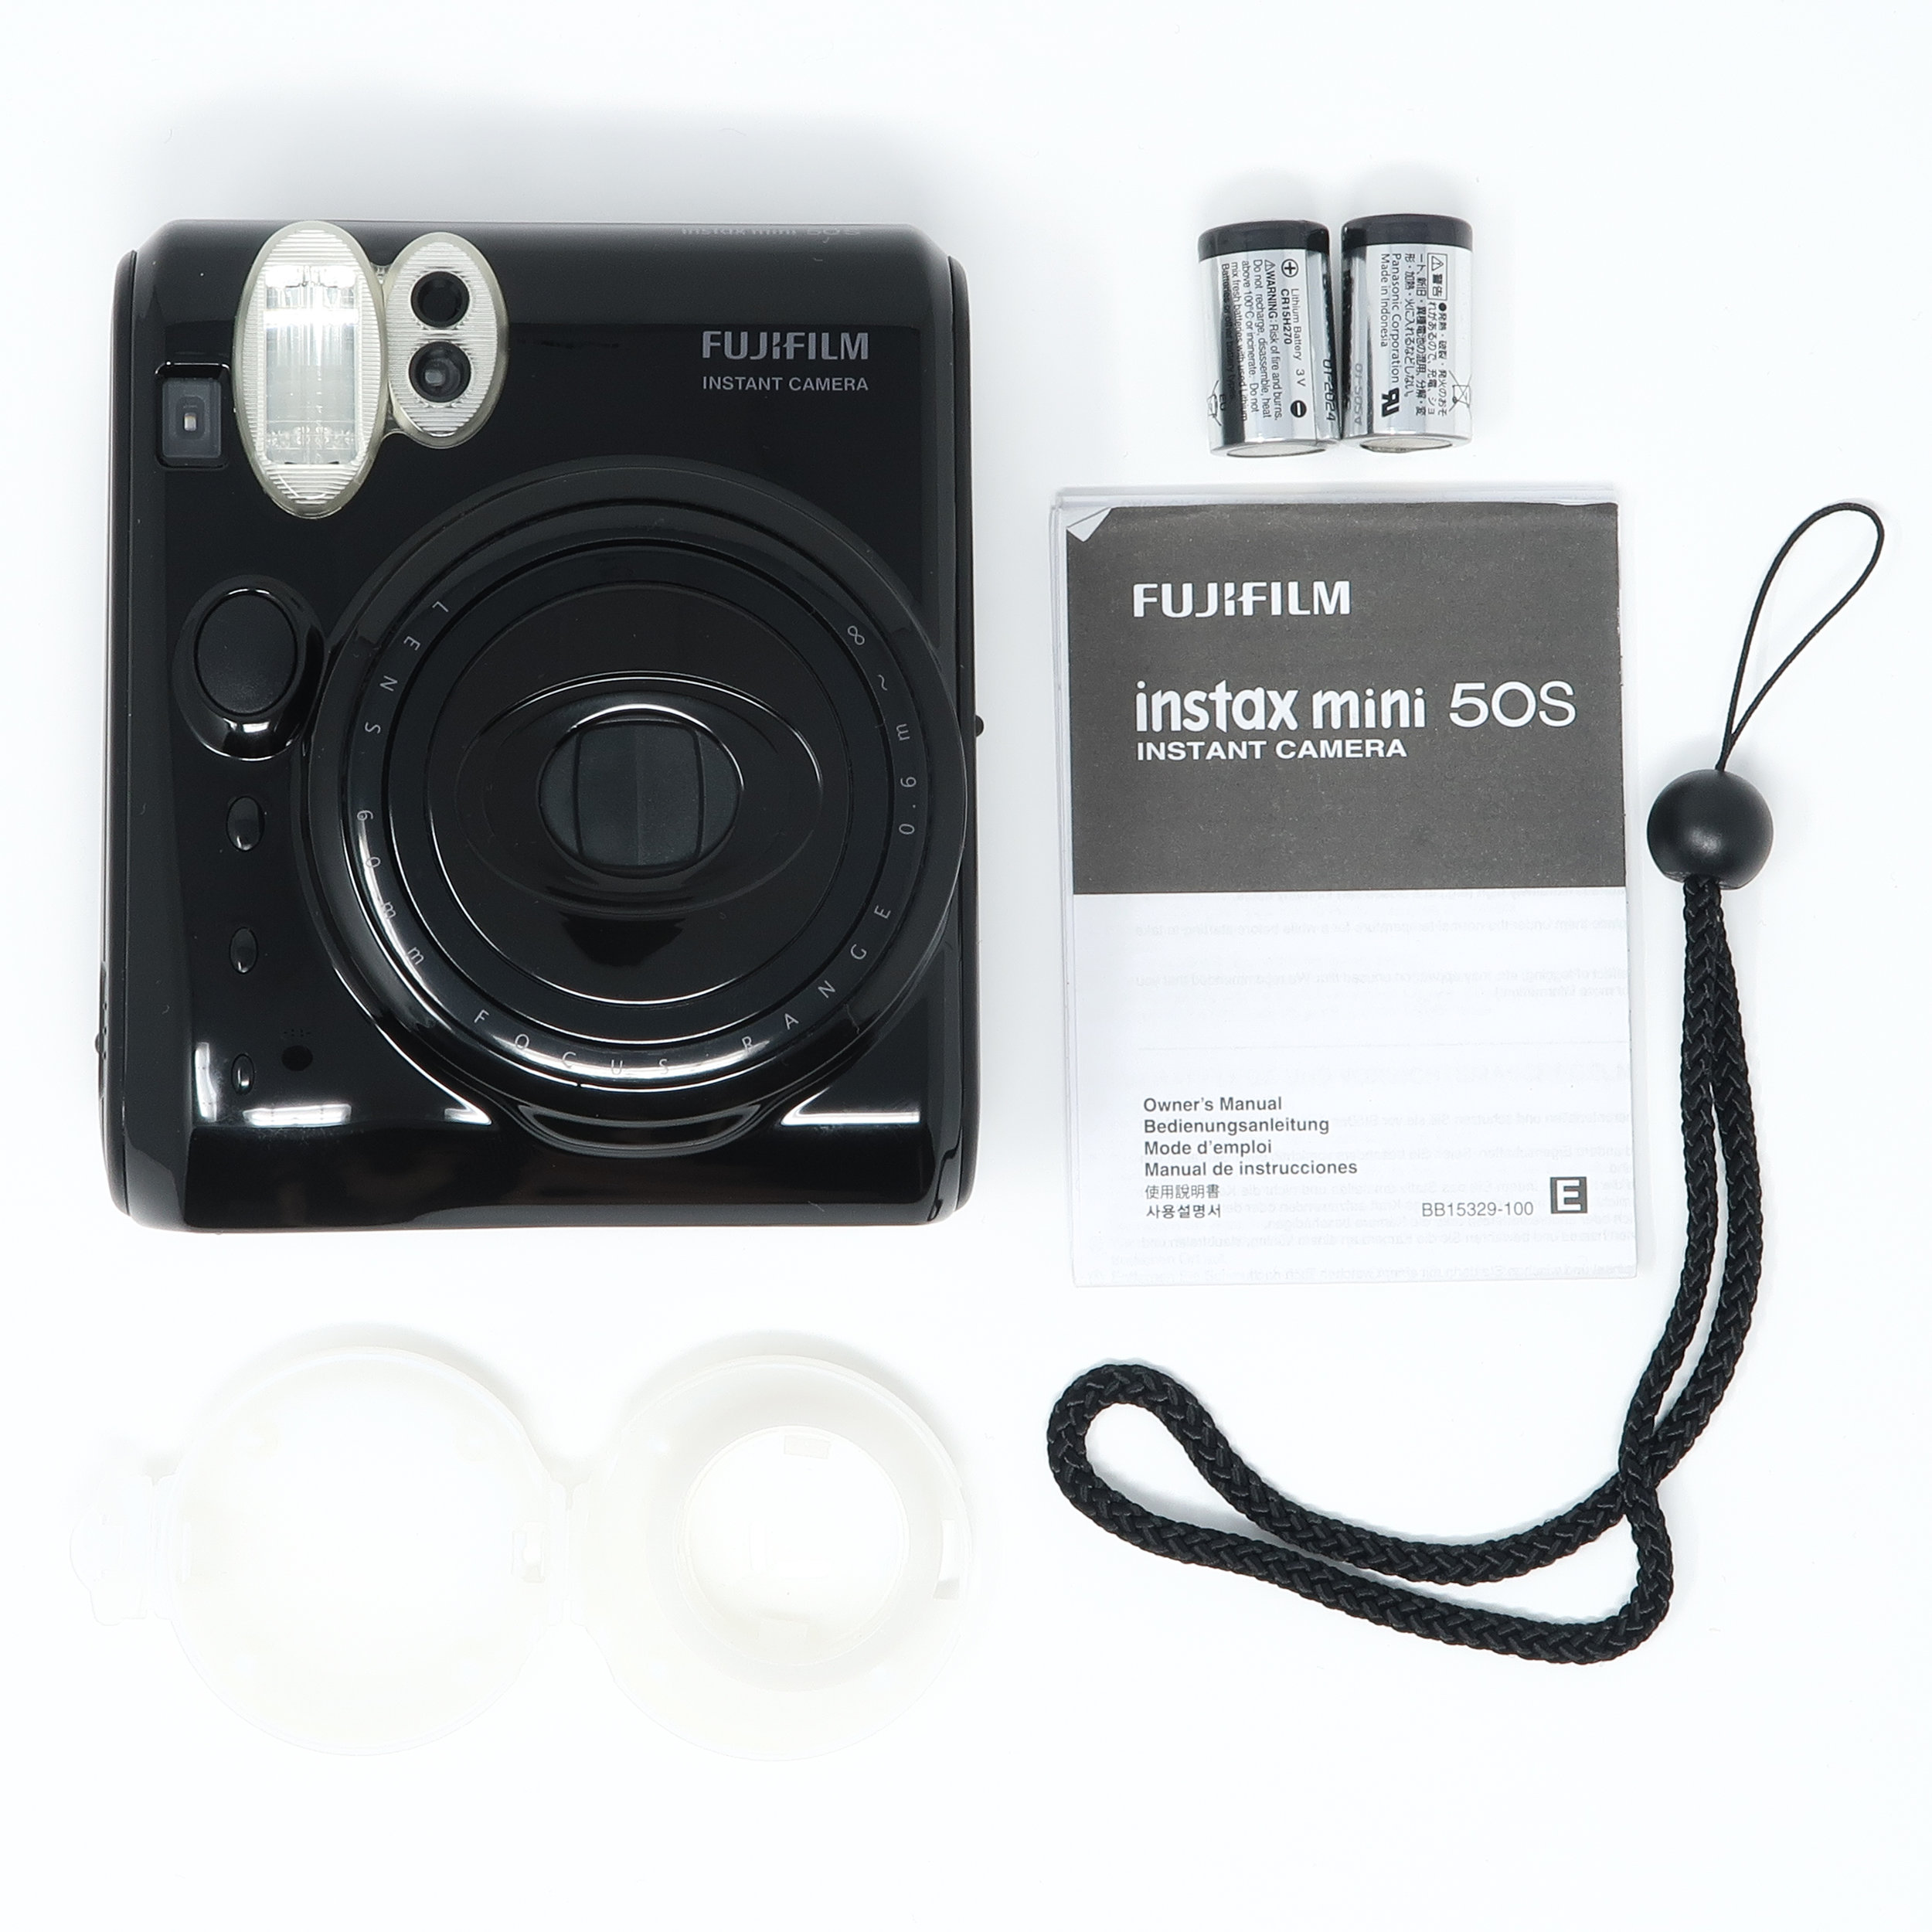 Fujifilm Instax Mini 50S Camera Review & How Guide EVERYTHING INSTAX - Camera Reviews & More